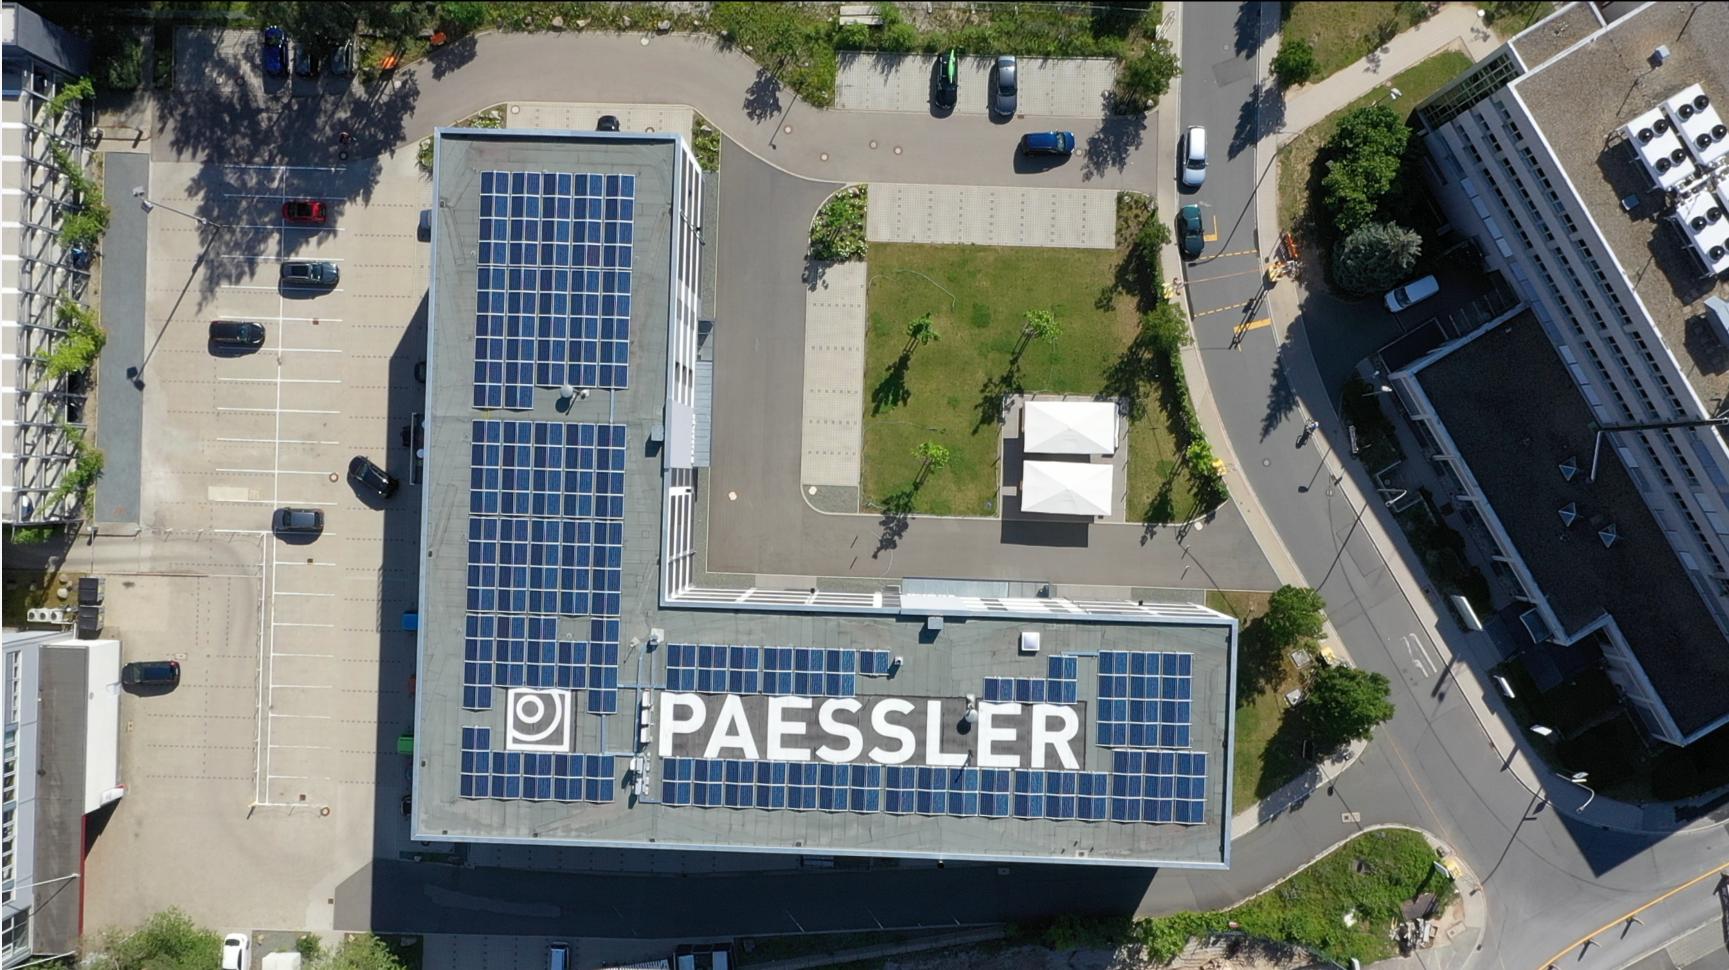 Paessler ประกาศเข้าซื้อกิจการ ITPS บริษัทเทคโนโลยีสัญชาติสวิส พัฒนาทางเทคโนโลยี